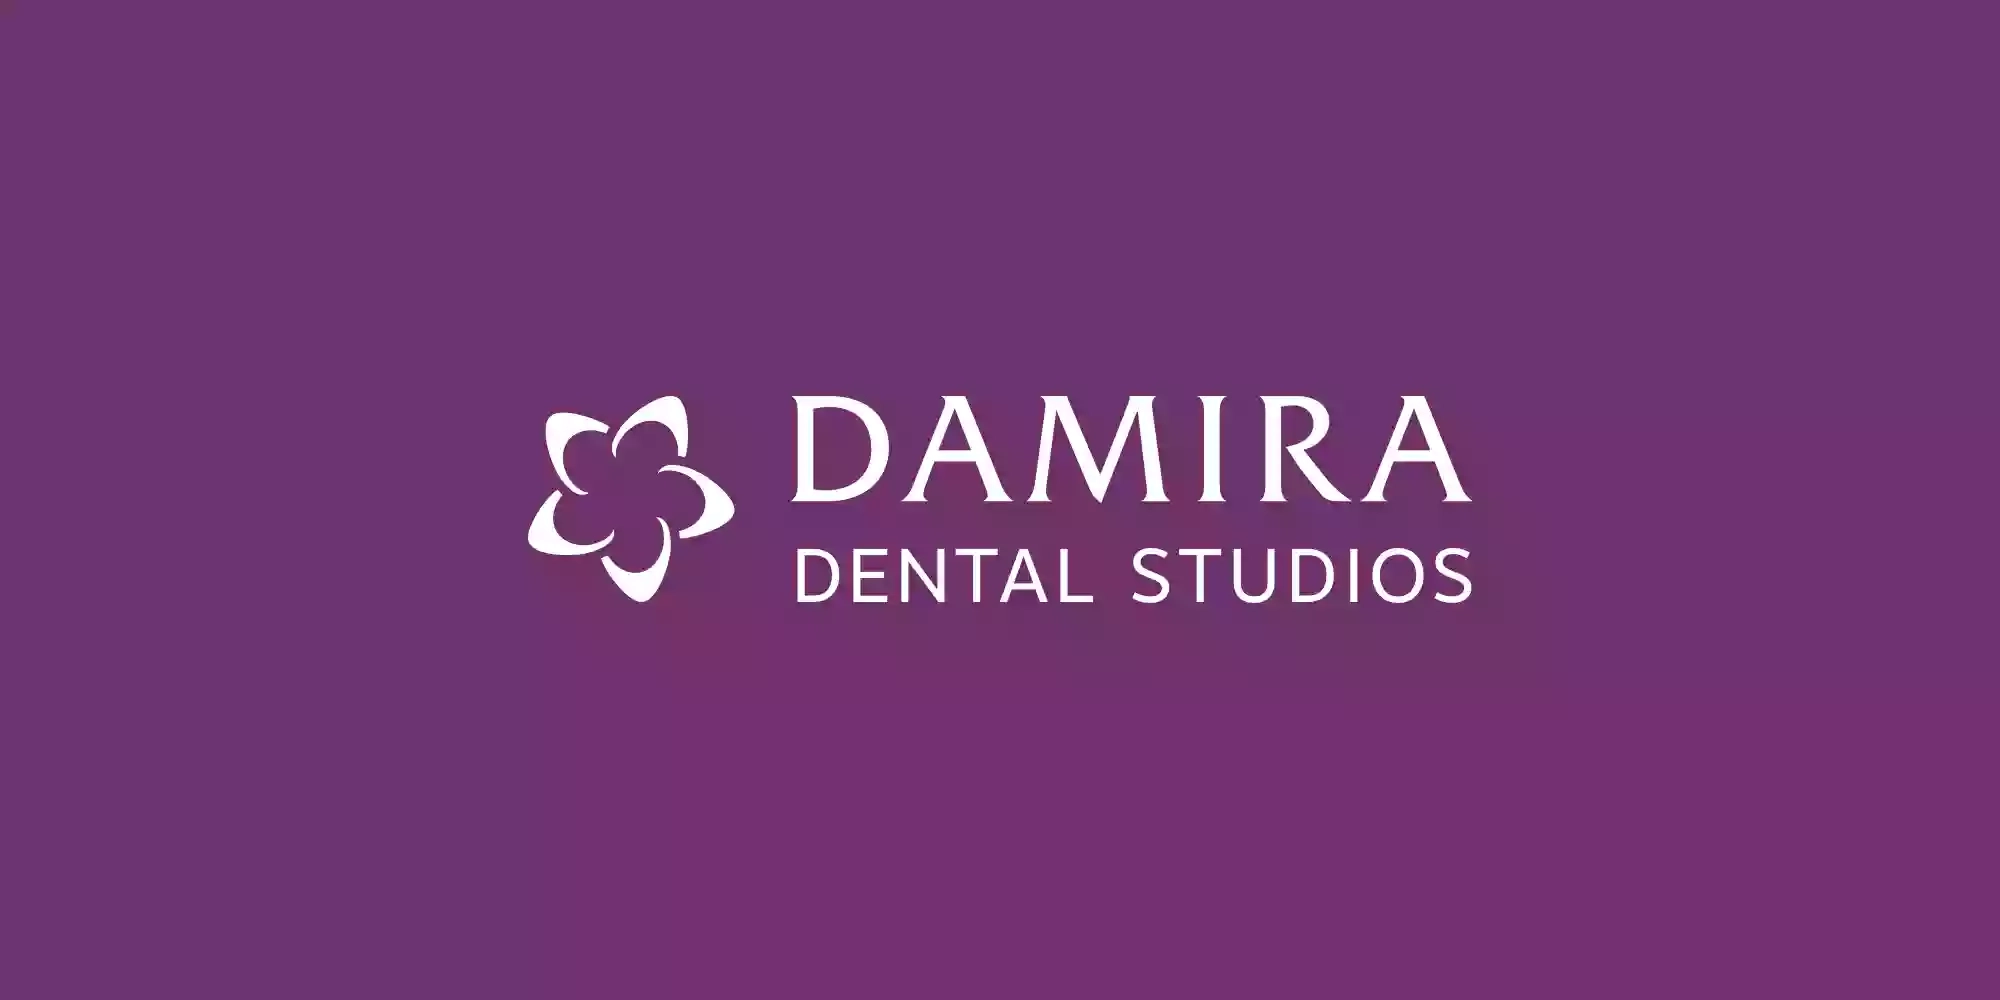 Damira Maycroft Dental Practice